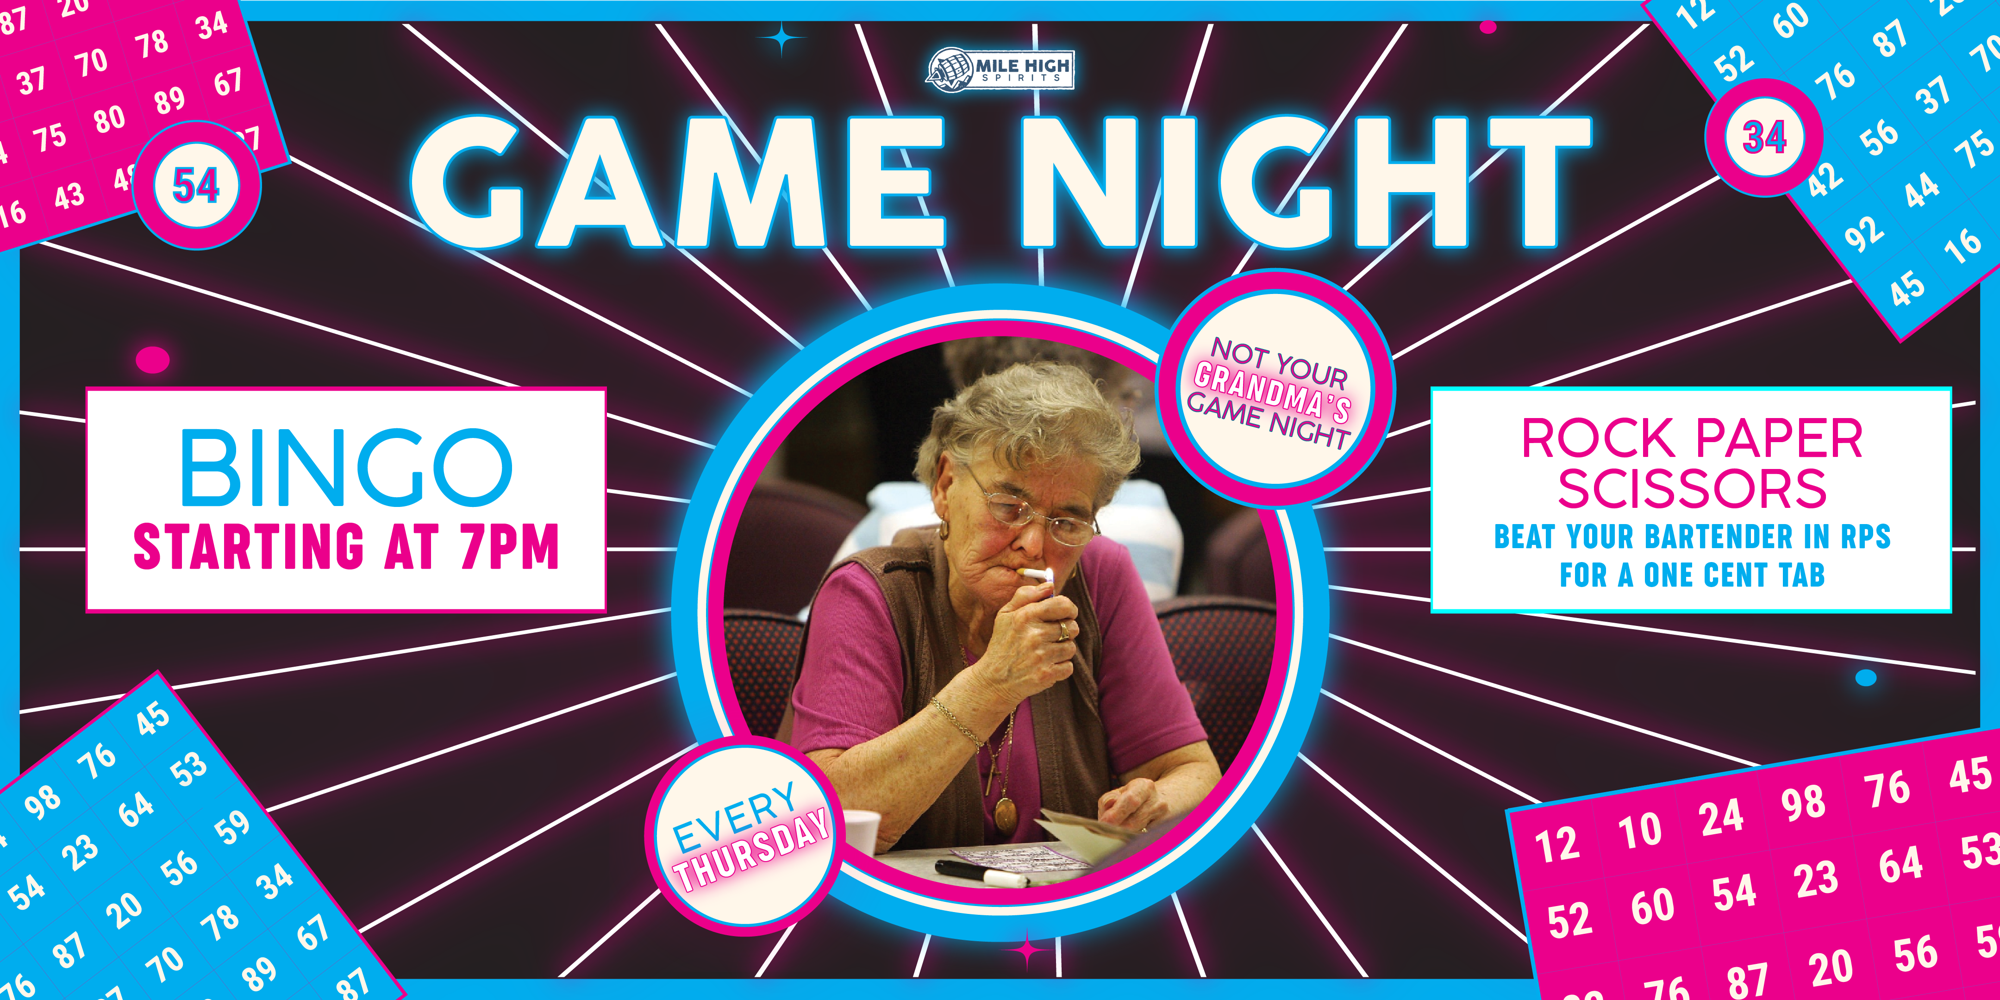 Thursday Game Night at Mile High Spirits promotional image